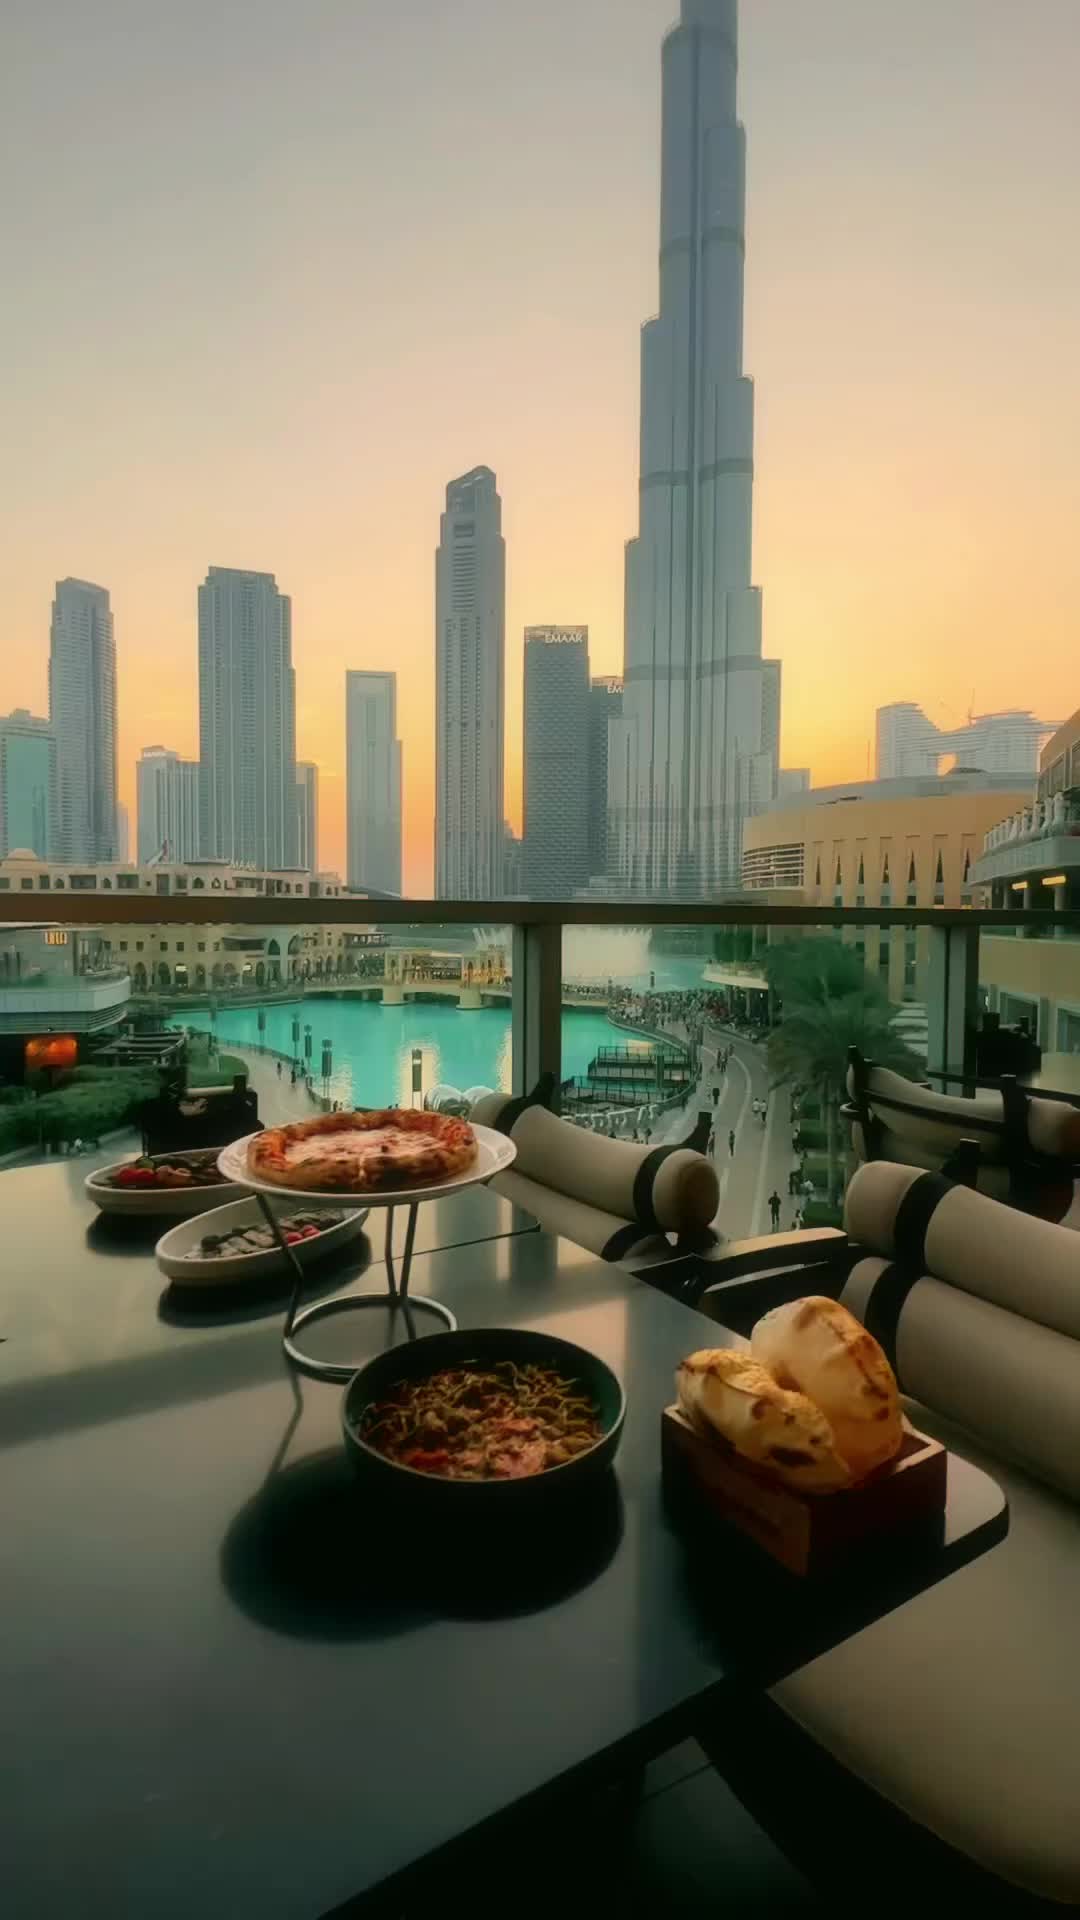 Stunning Sunset View from Burj Khalifa in Dubai